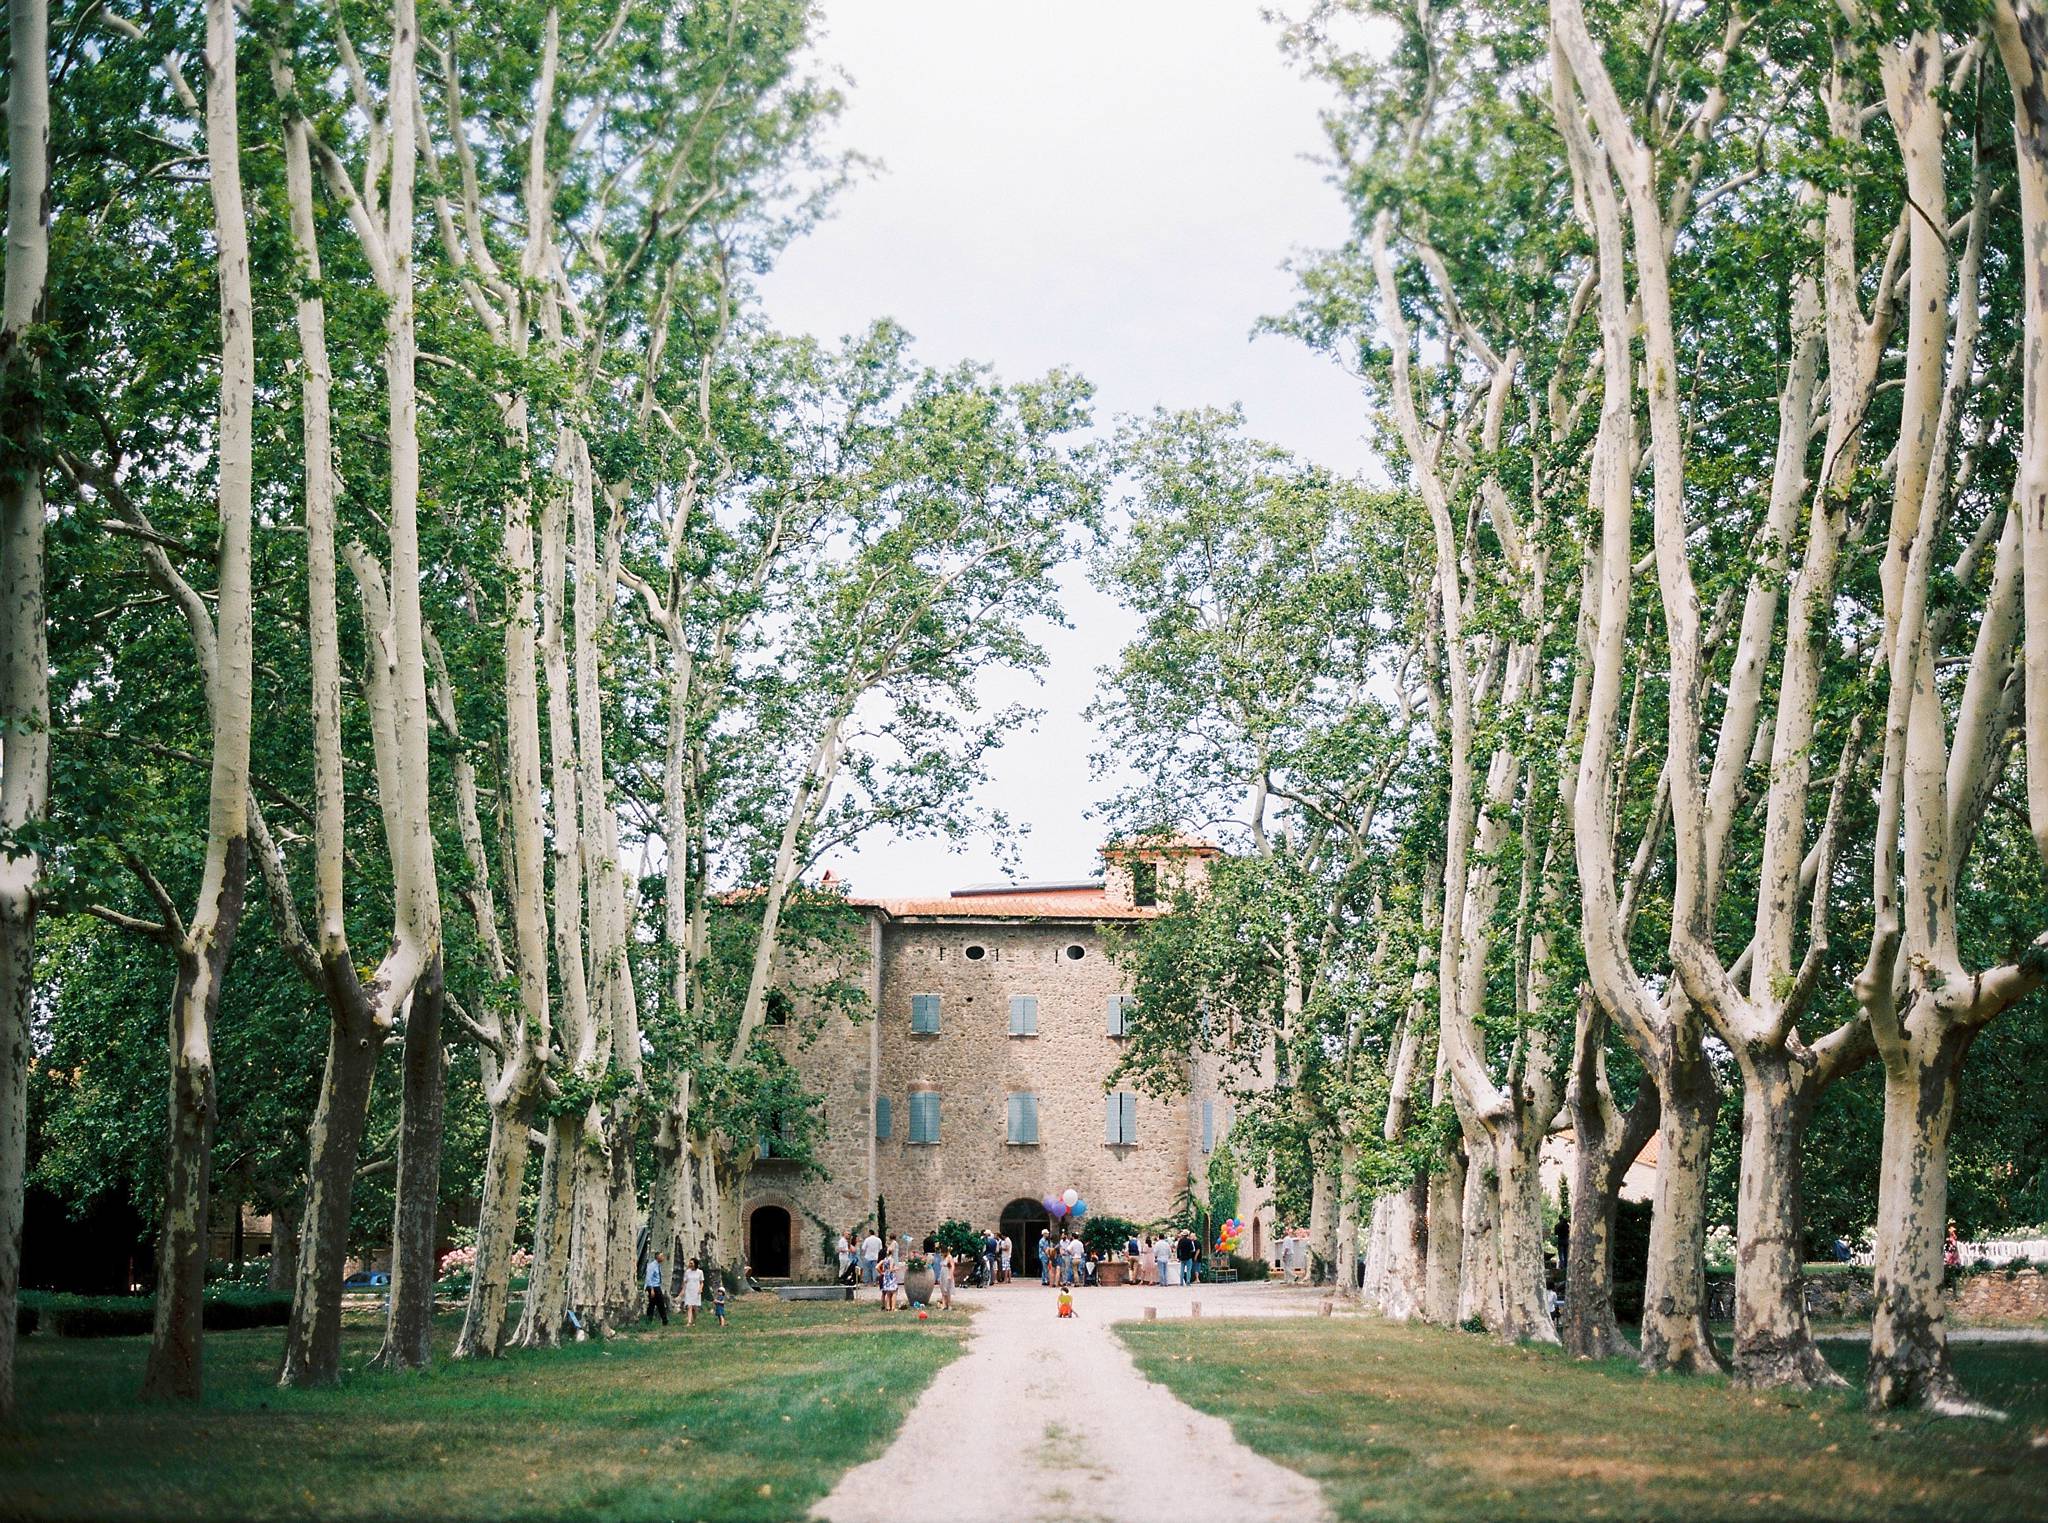 Mariage au château de Villeclare - Hugo Hennequin Photographe Perpignan Sud de France - Laeti + David-0064.jpg